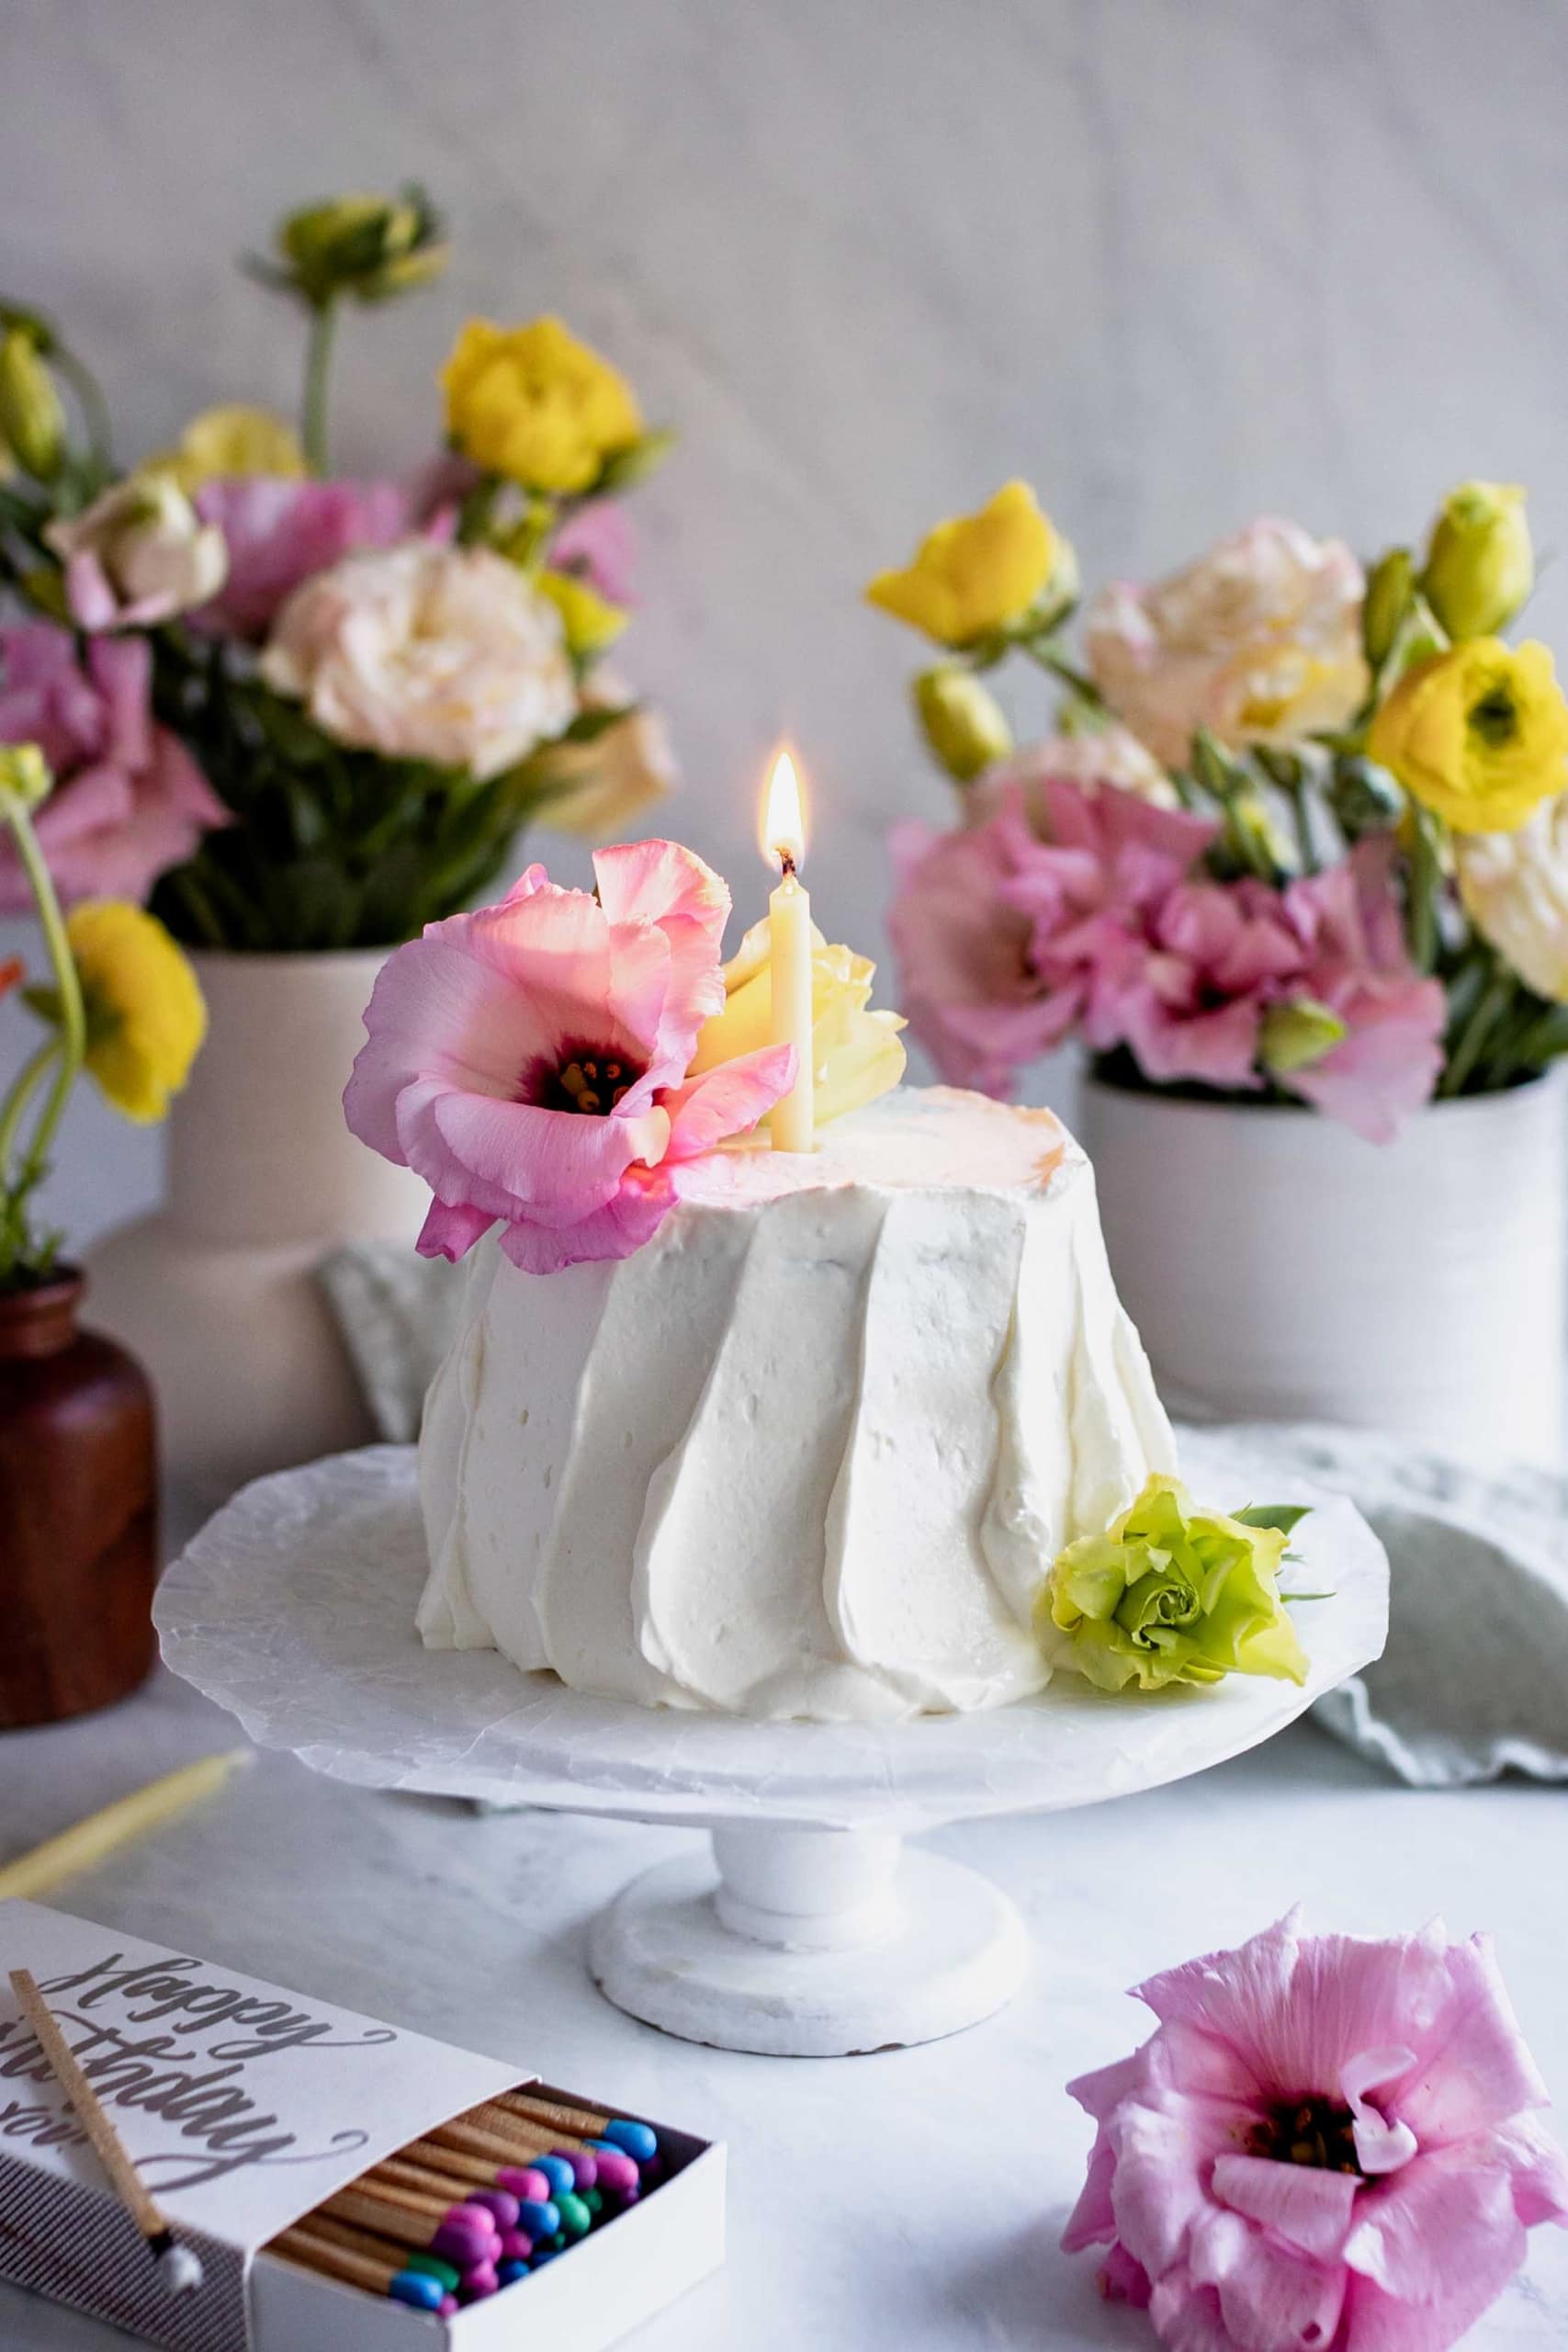 First Birthday Smash Cake with Yogurt Frosting